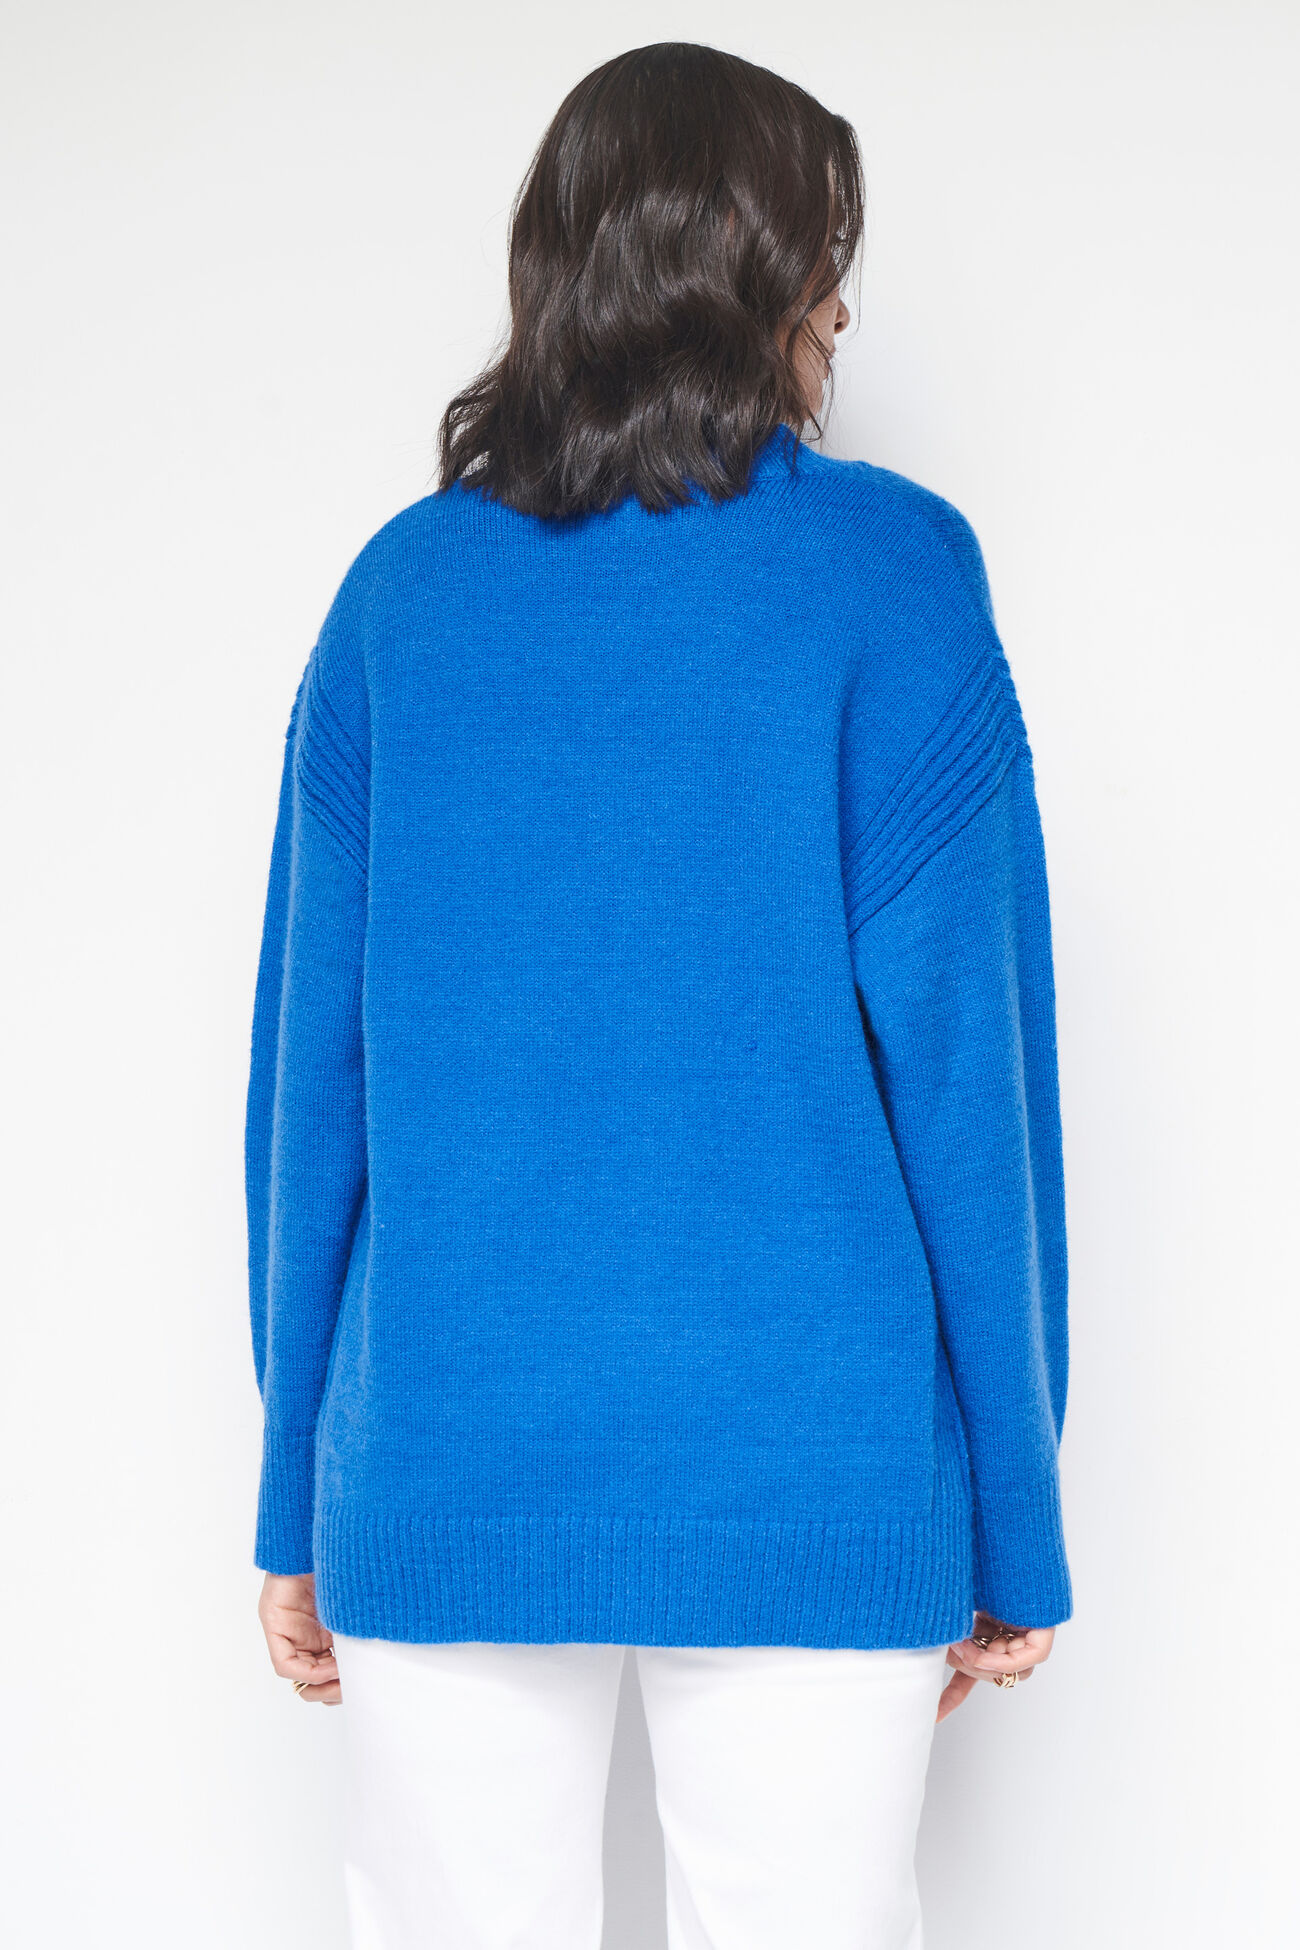 Aspen Over-Sized Sweater, Blue, image 7